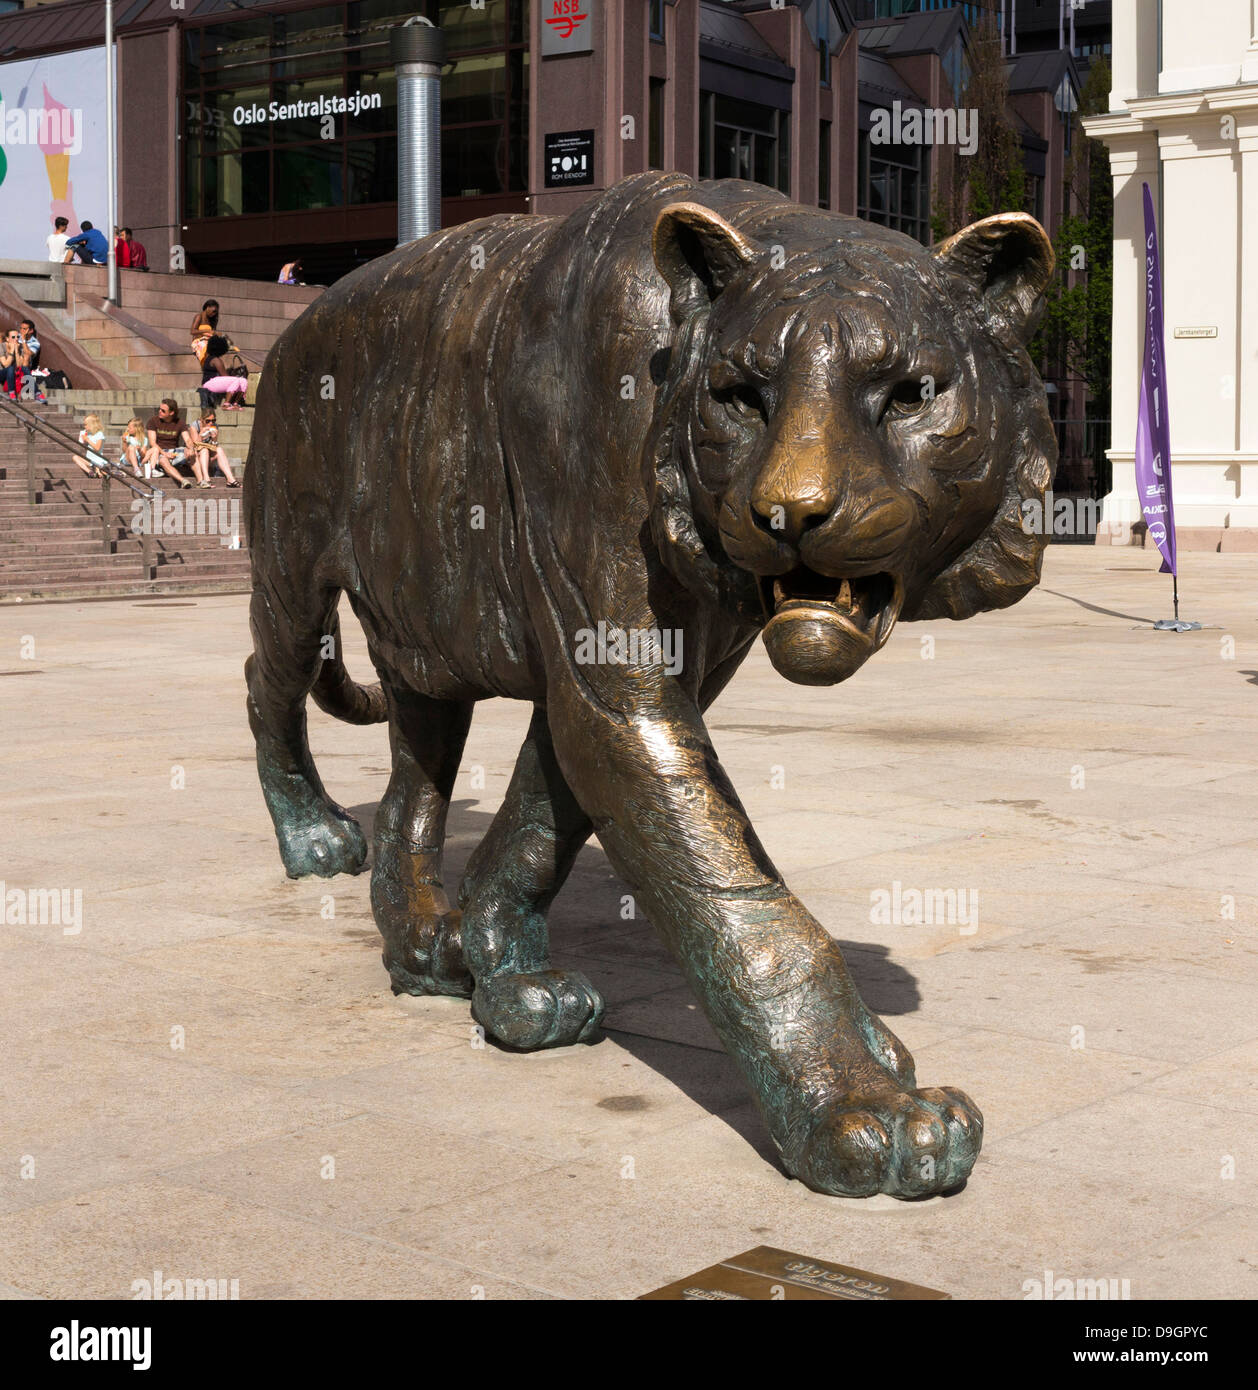 Die berühmte Tiger-Statue vor dem Bahnhof in Oslo, Norwegen Stockfoto